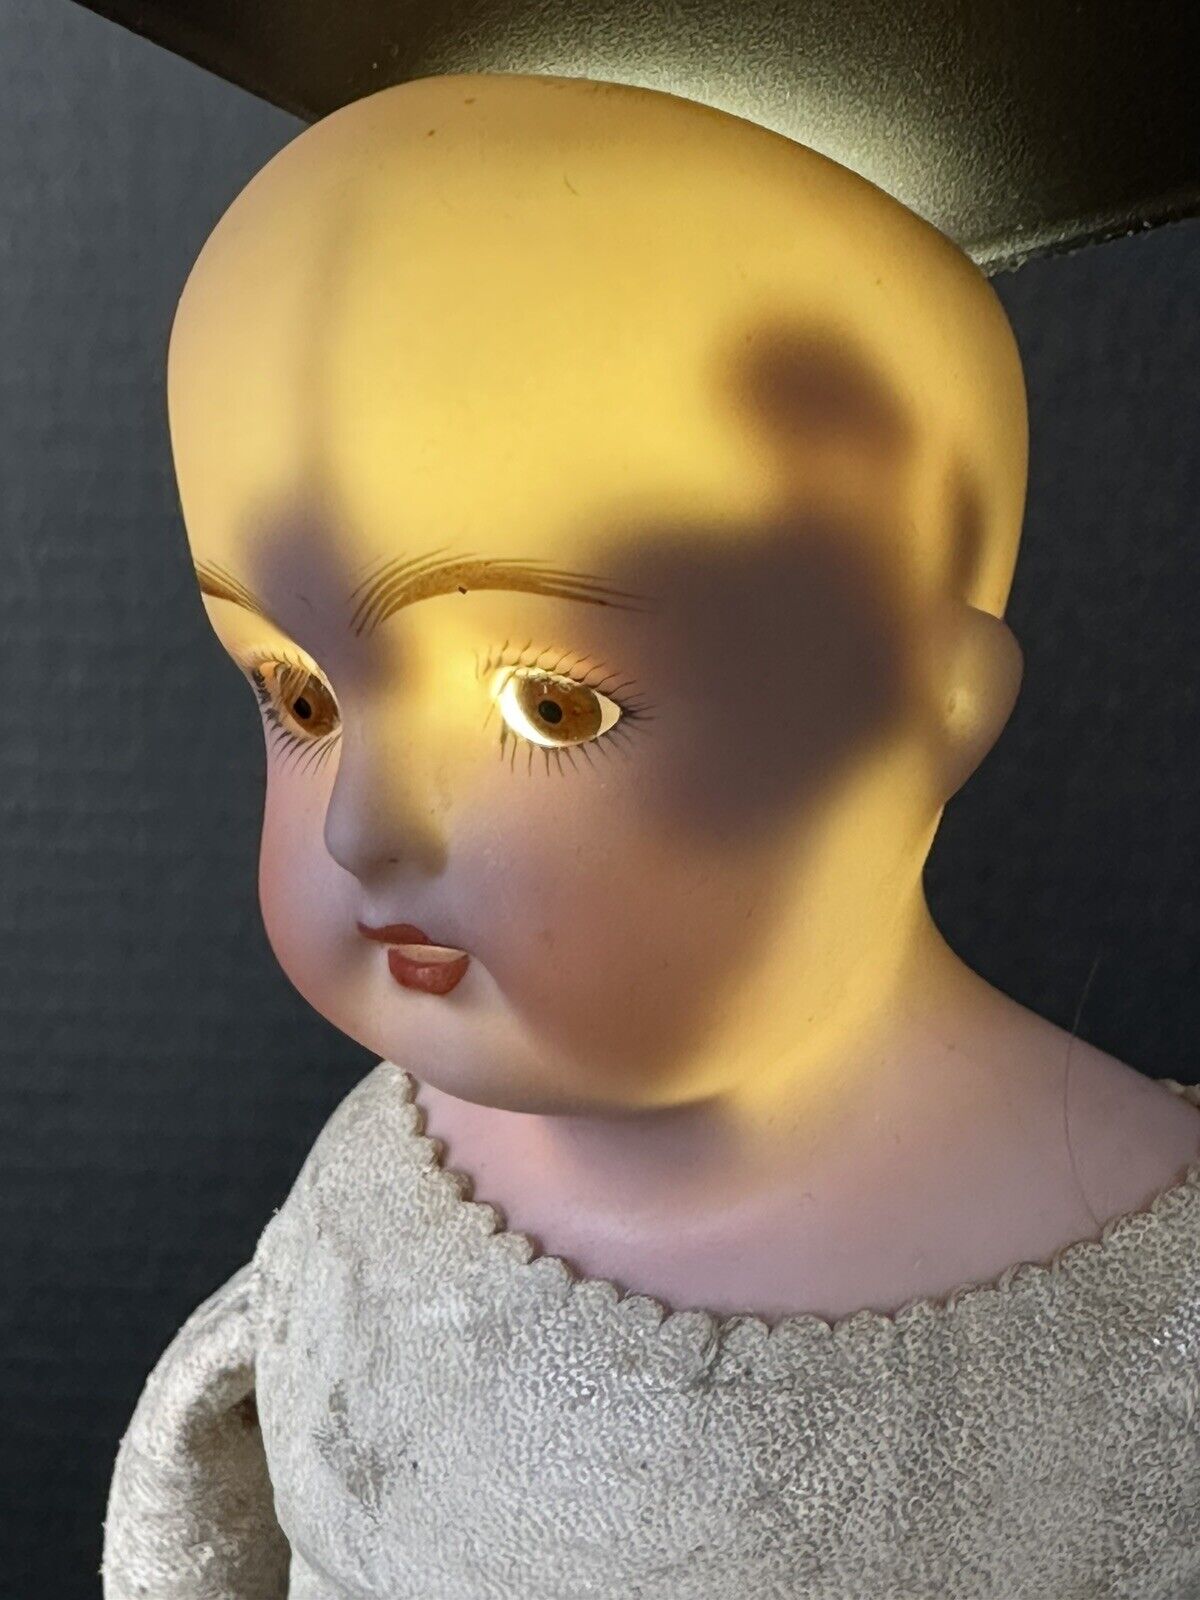 Antique German Kammer & Reinhardt Mold 245 (?) Bisque Shoulder Head 14” Doll